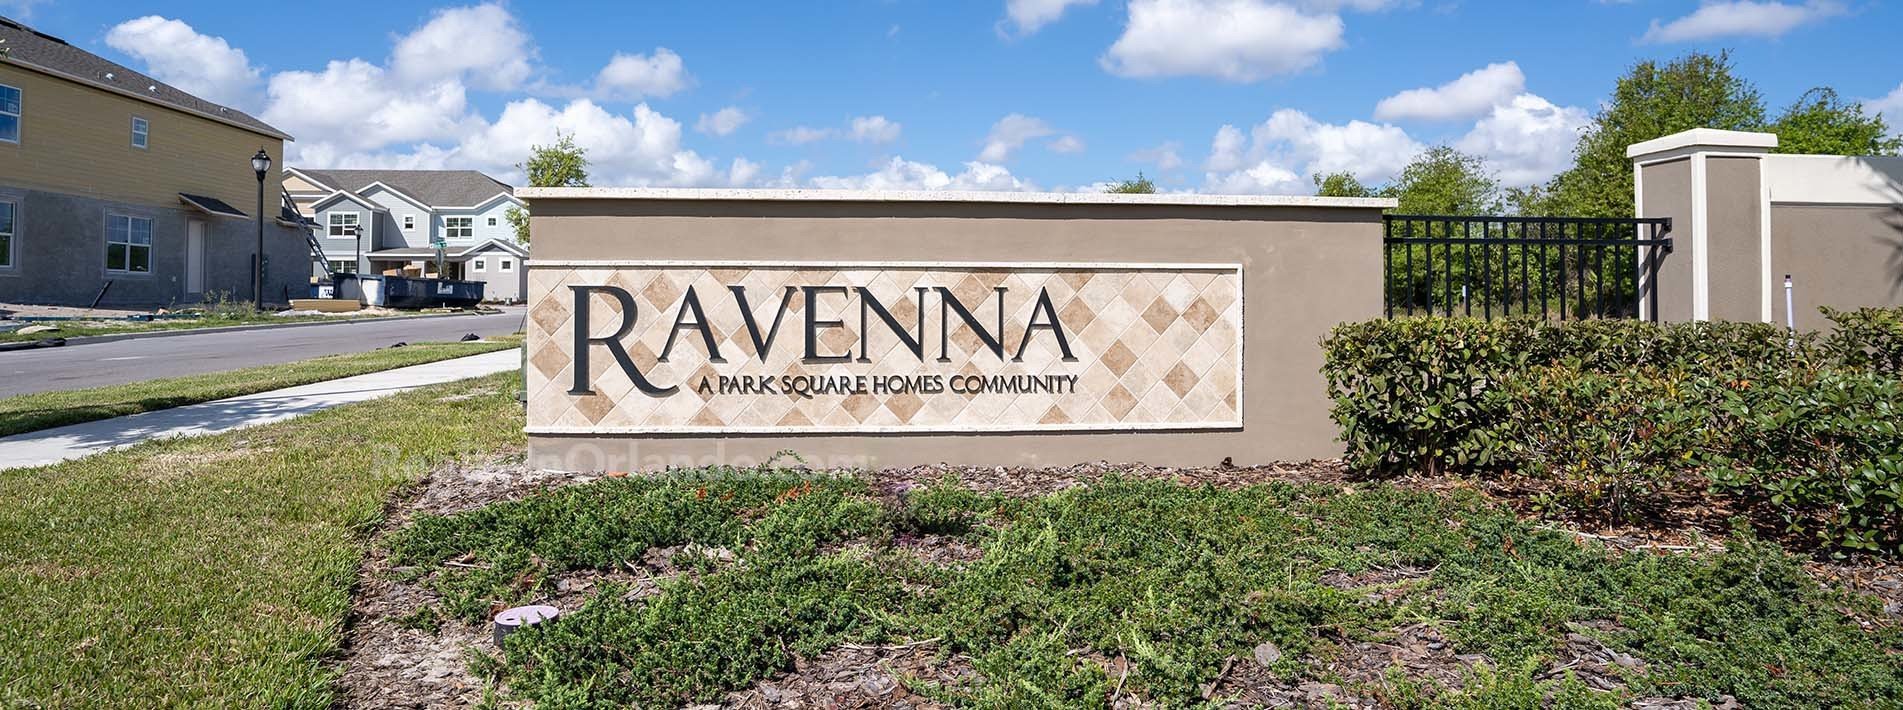 Ravenna Winter Garden Real Estate